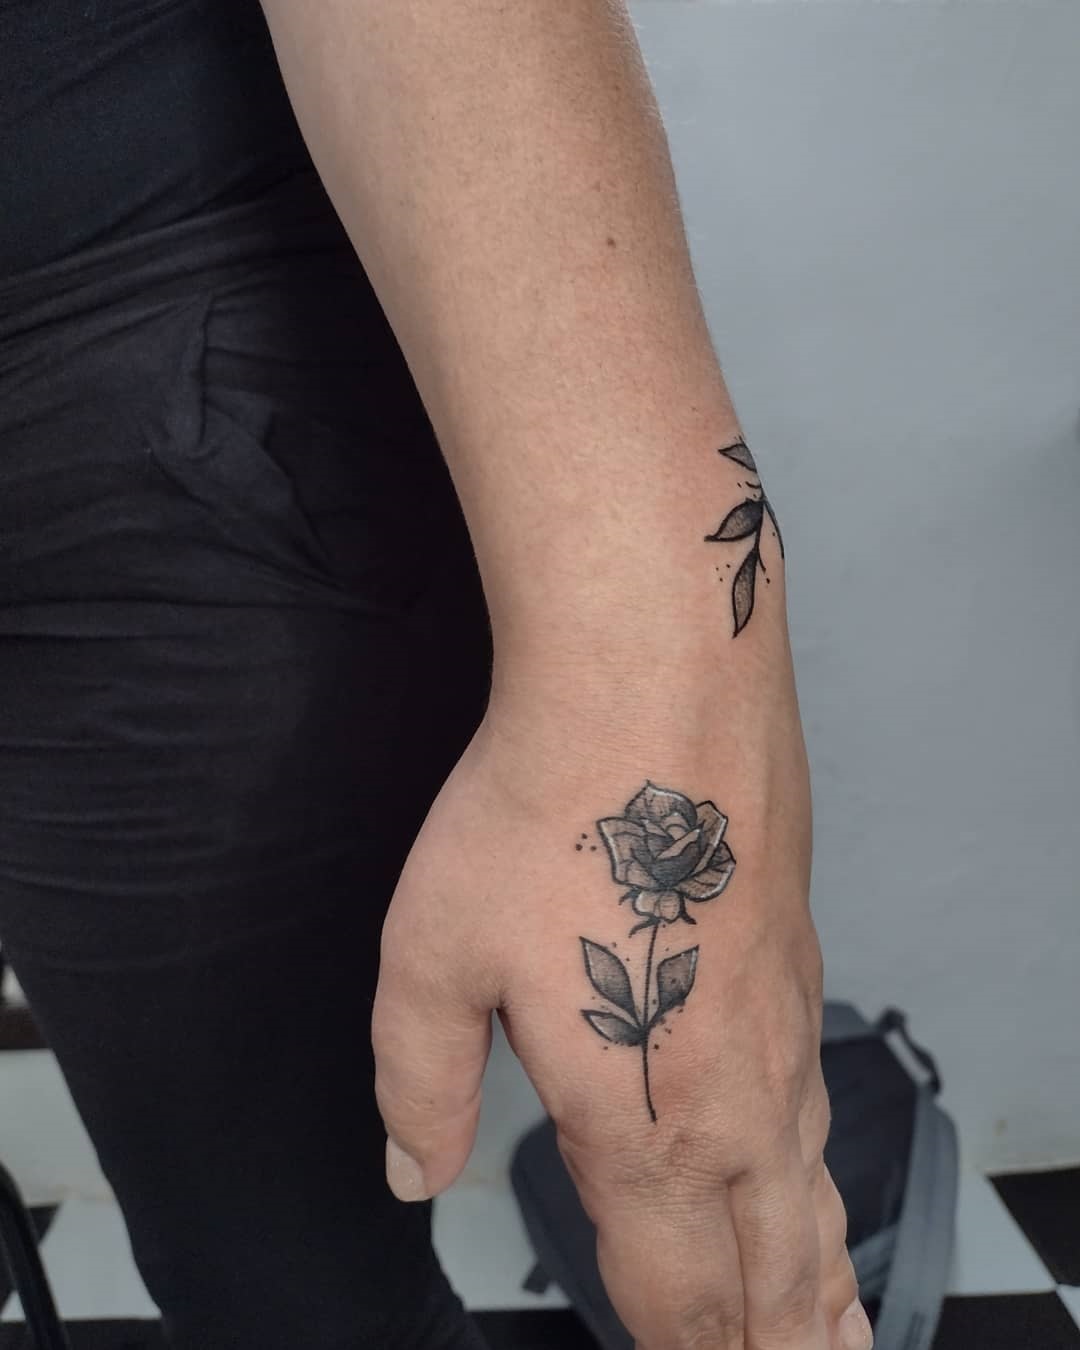 Rosa delicada na mão 🥰 #tattoofeminina #finelinetattoo #fineline #tat